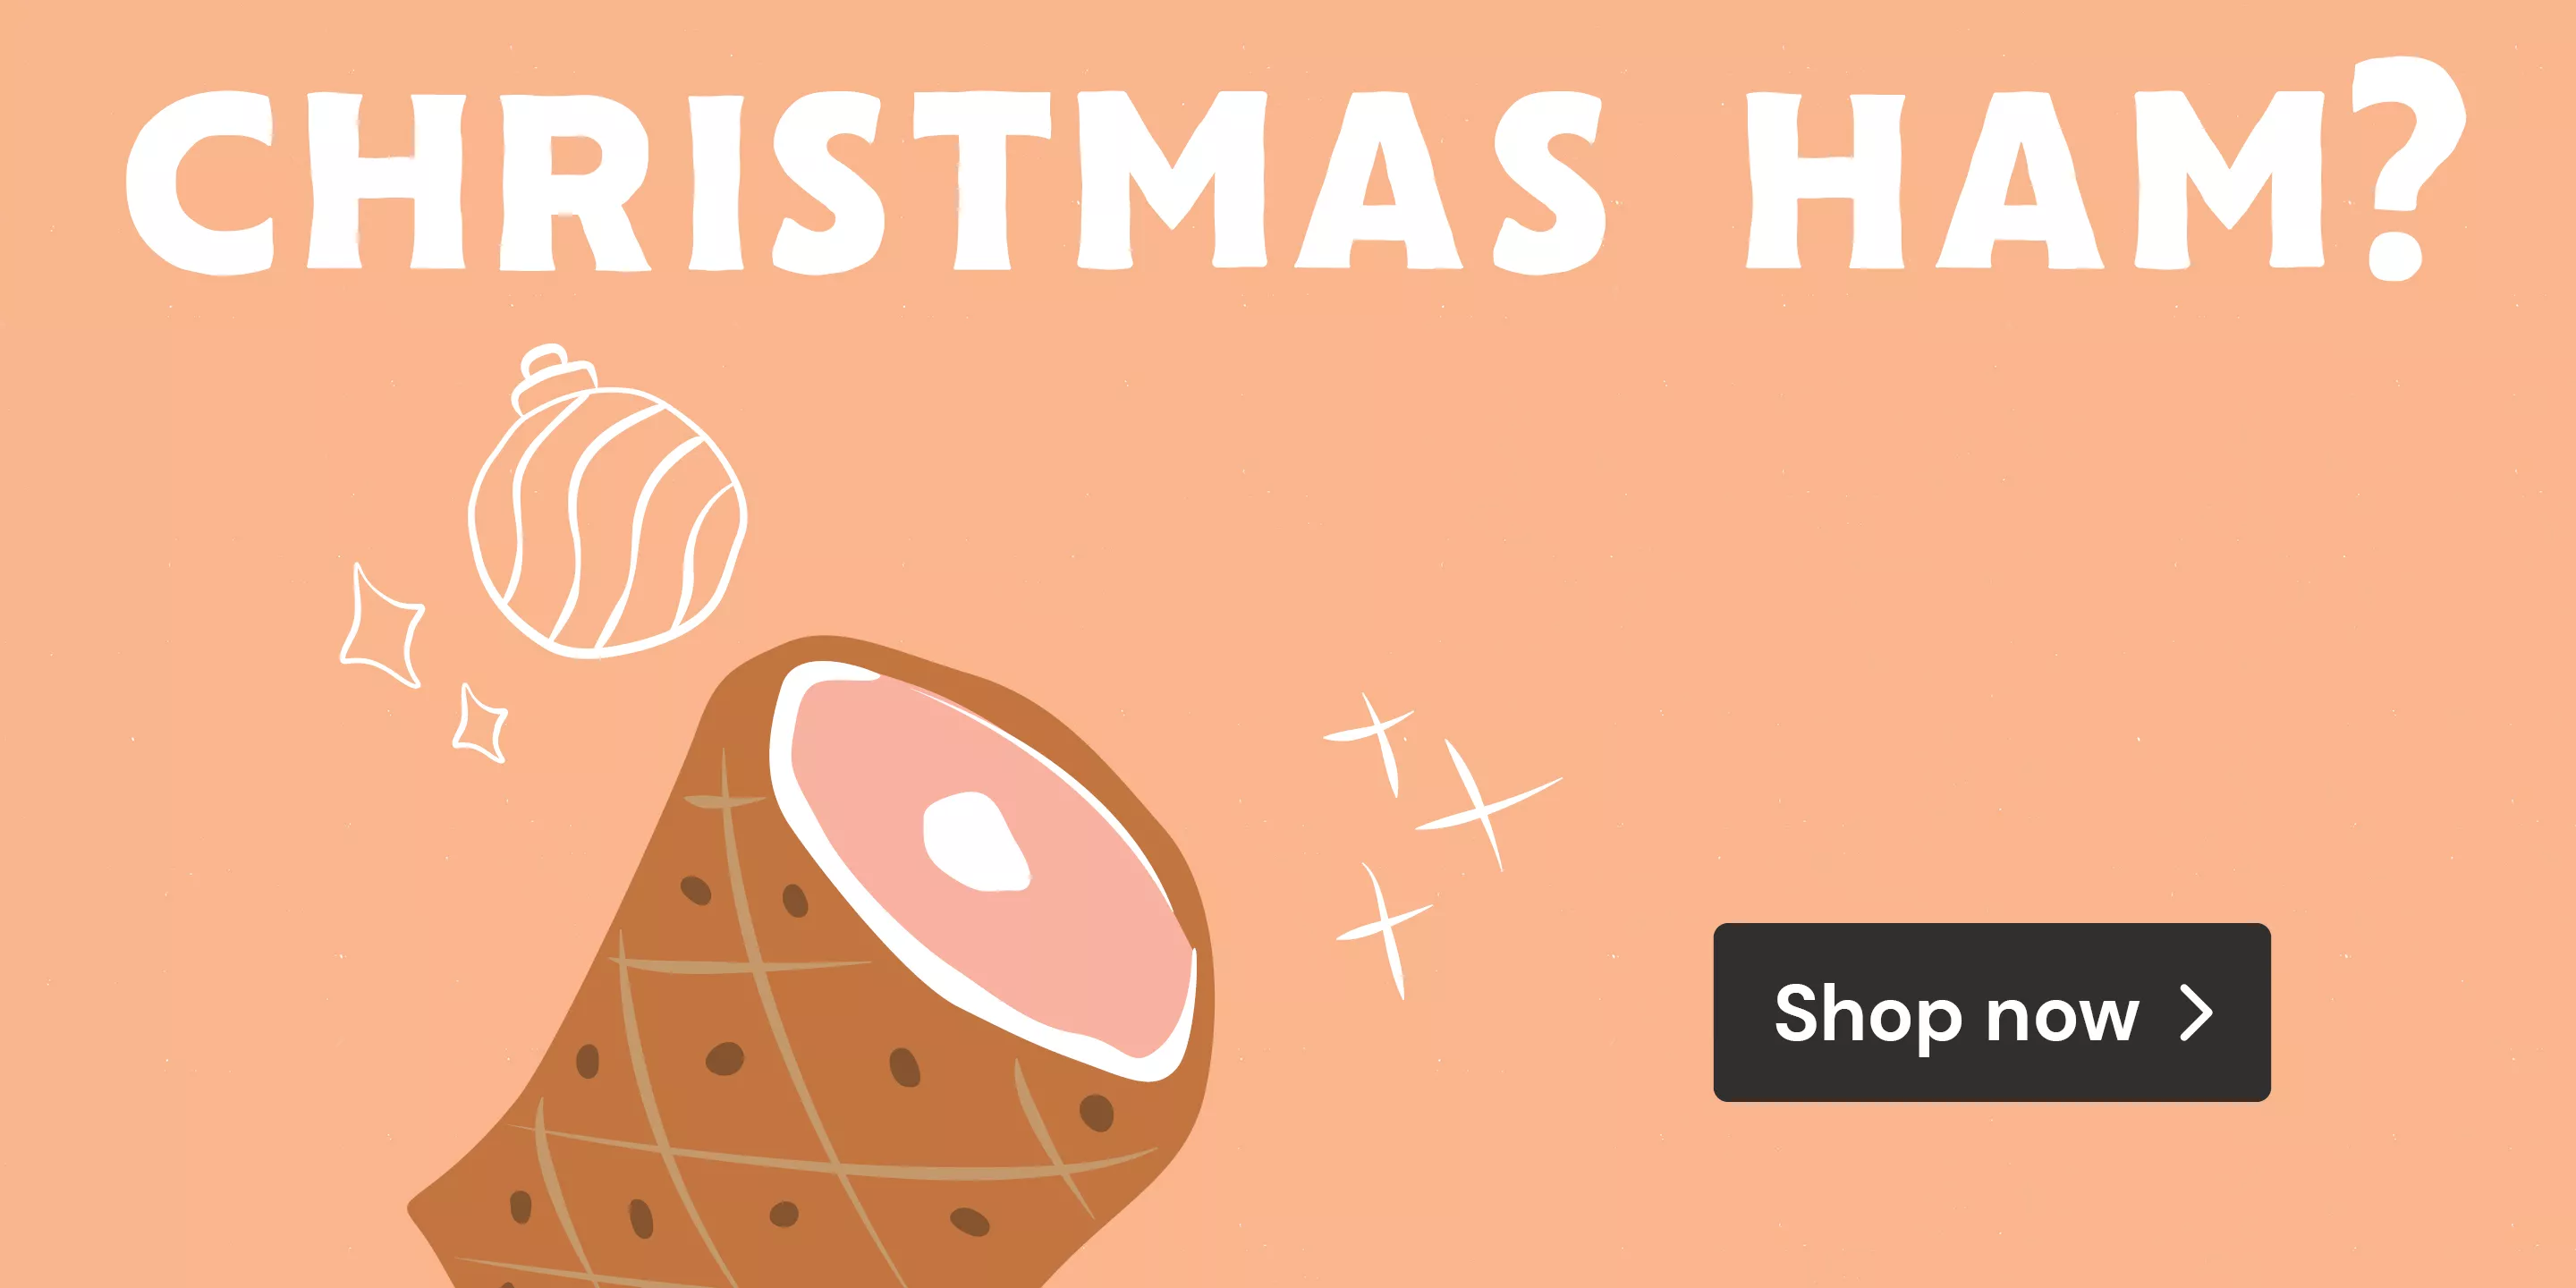 Christmas Ham? Shop now